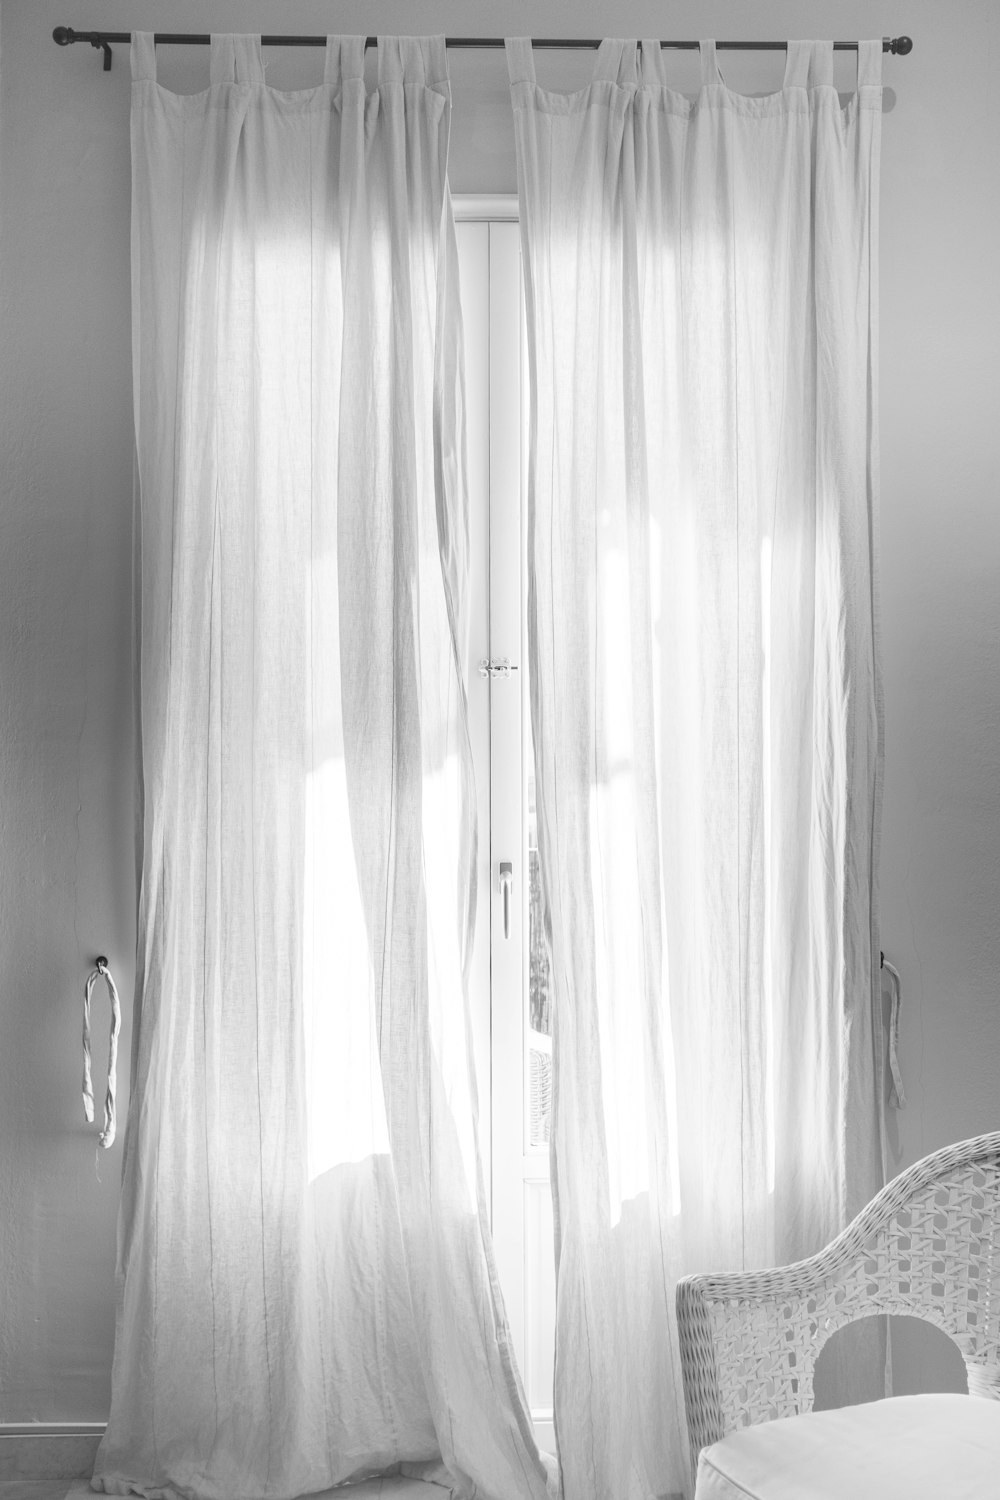 white window curtain hanging on black steel rod